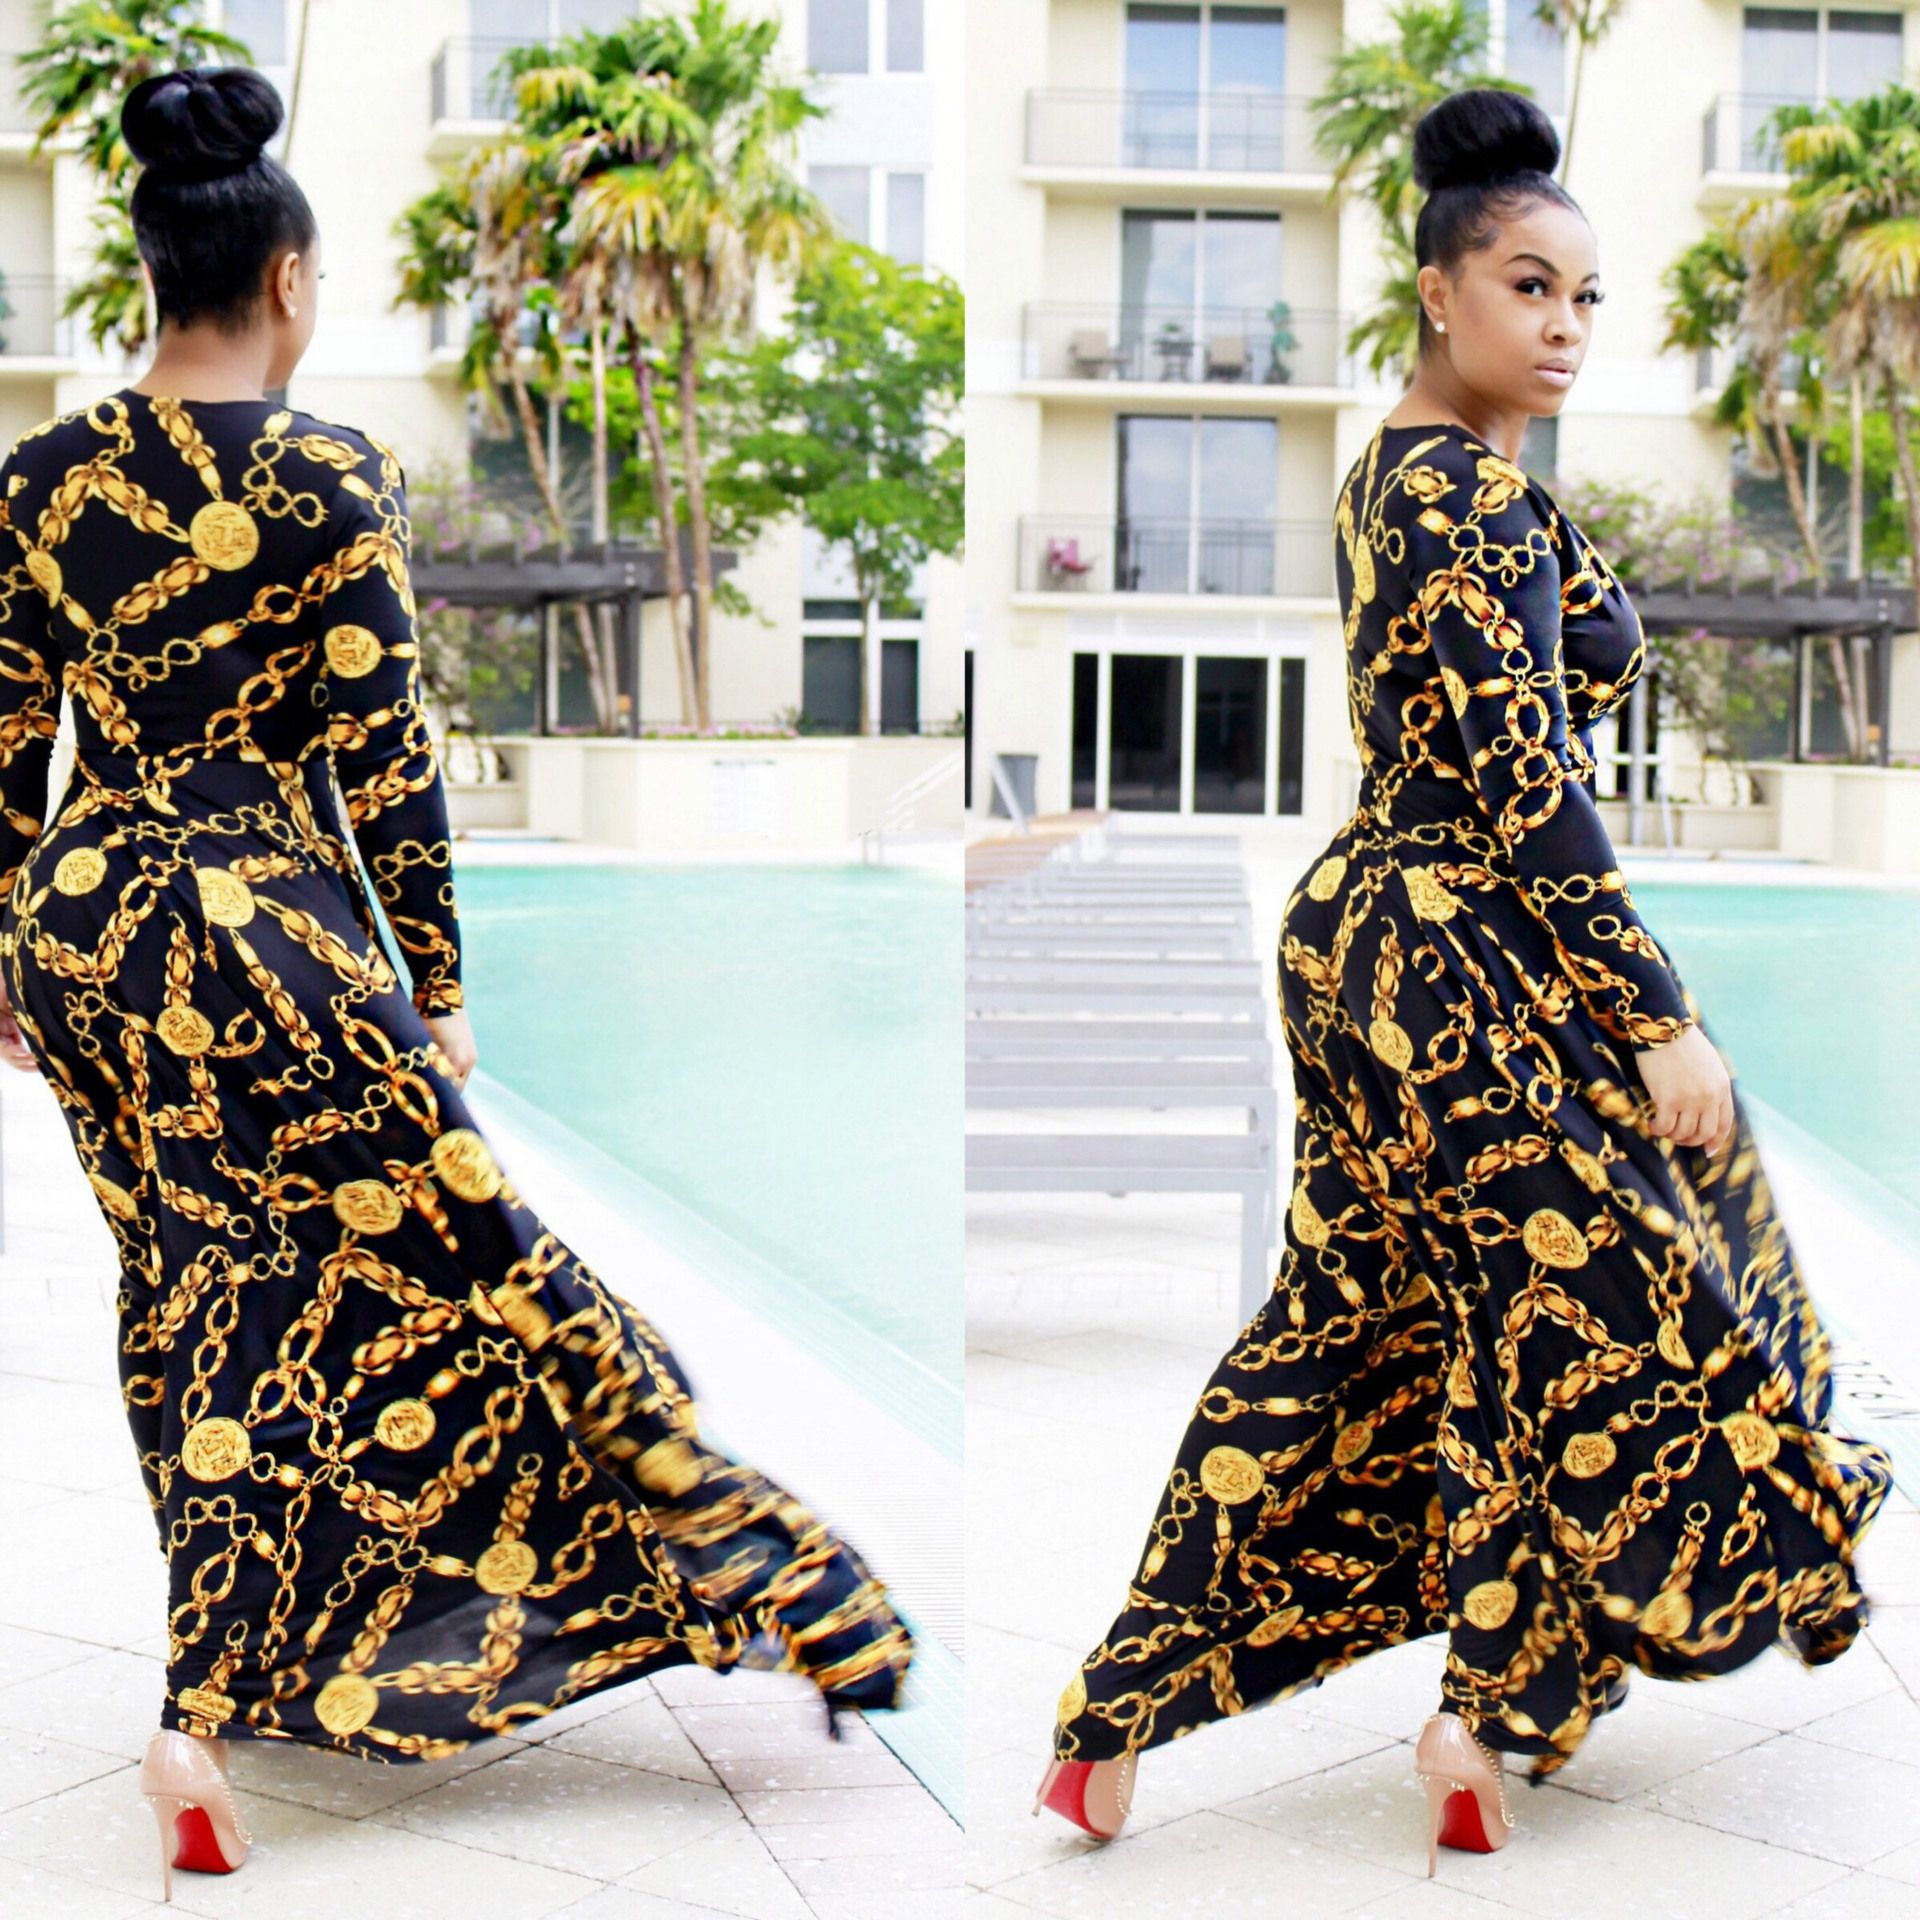 Elegant african print dresses